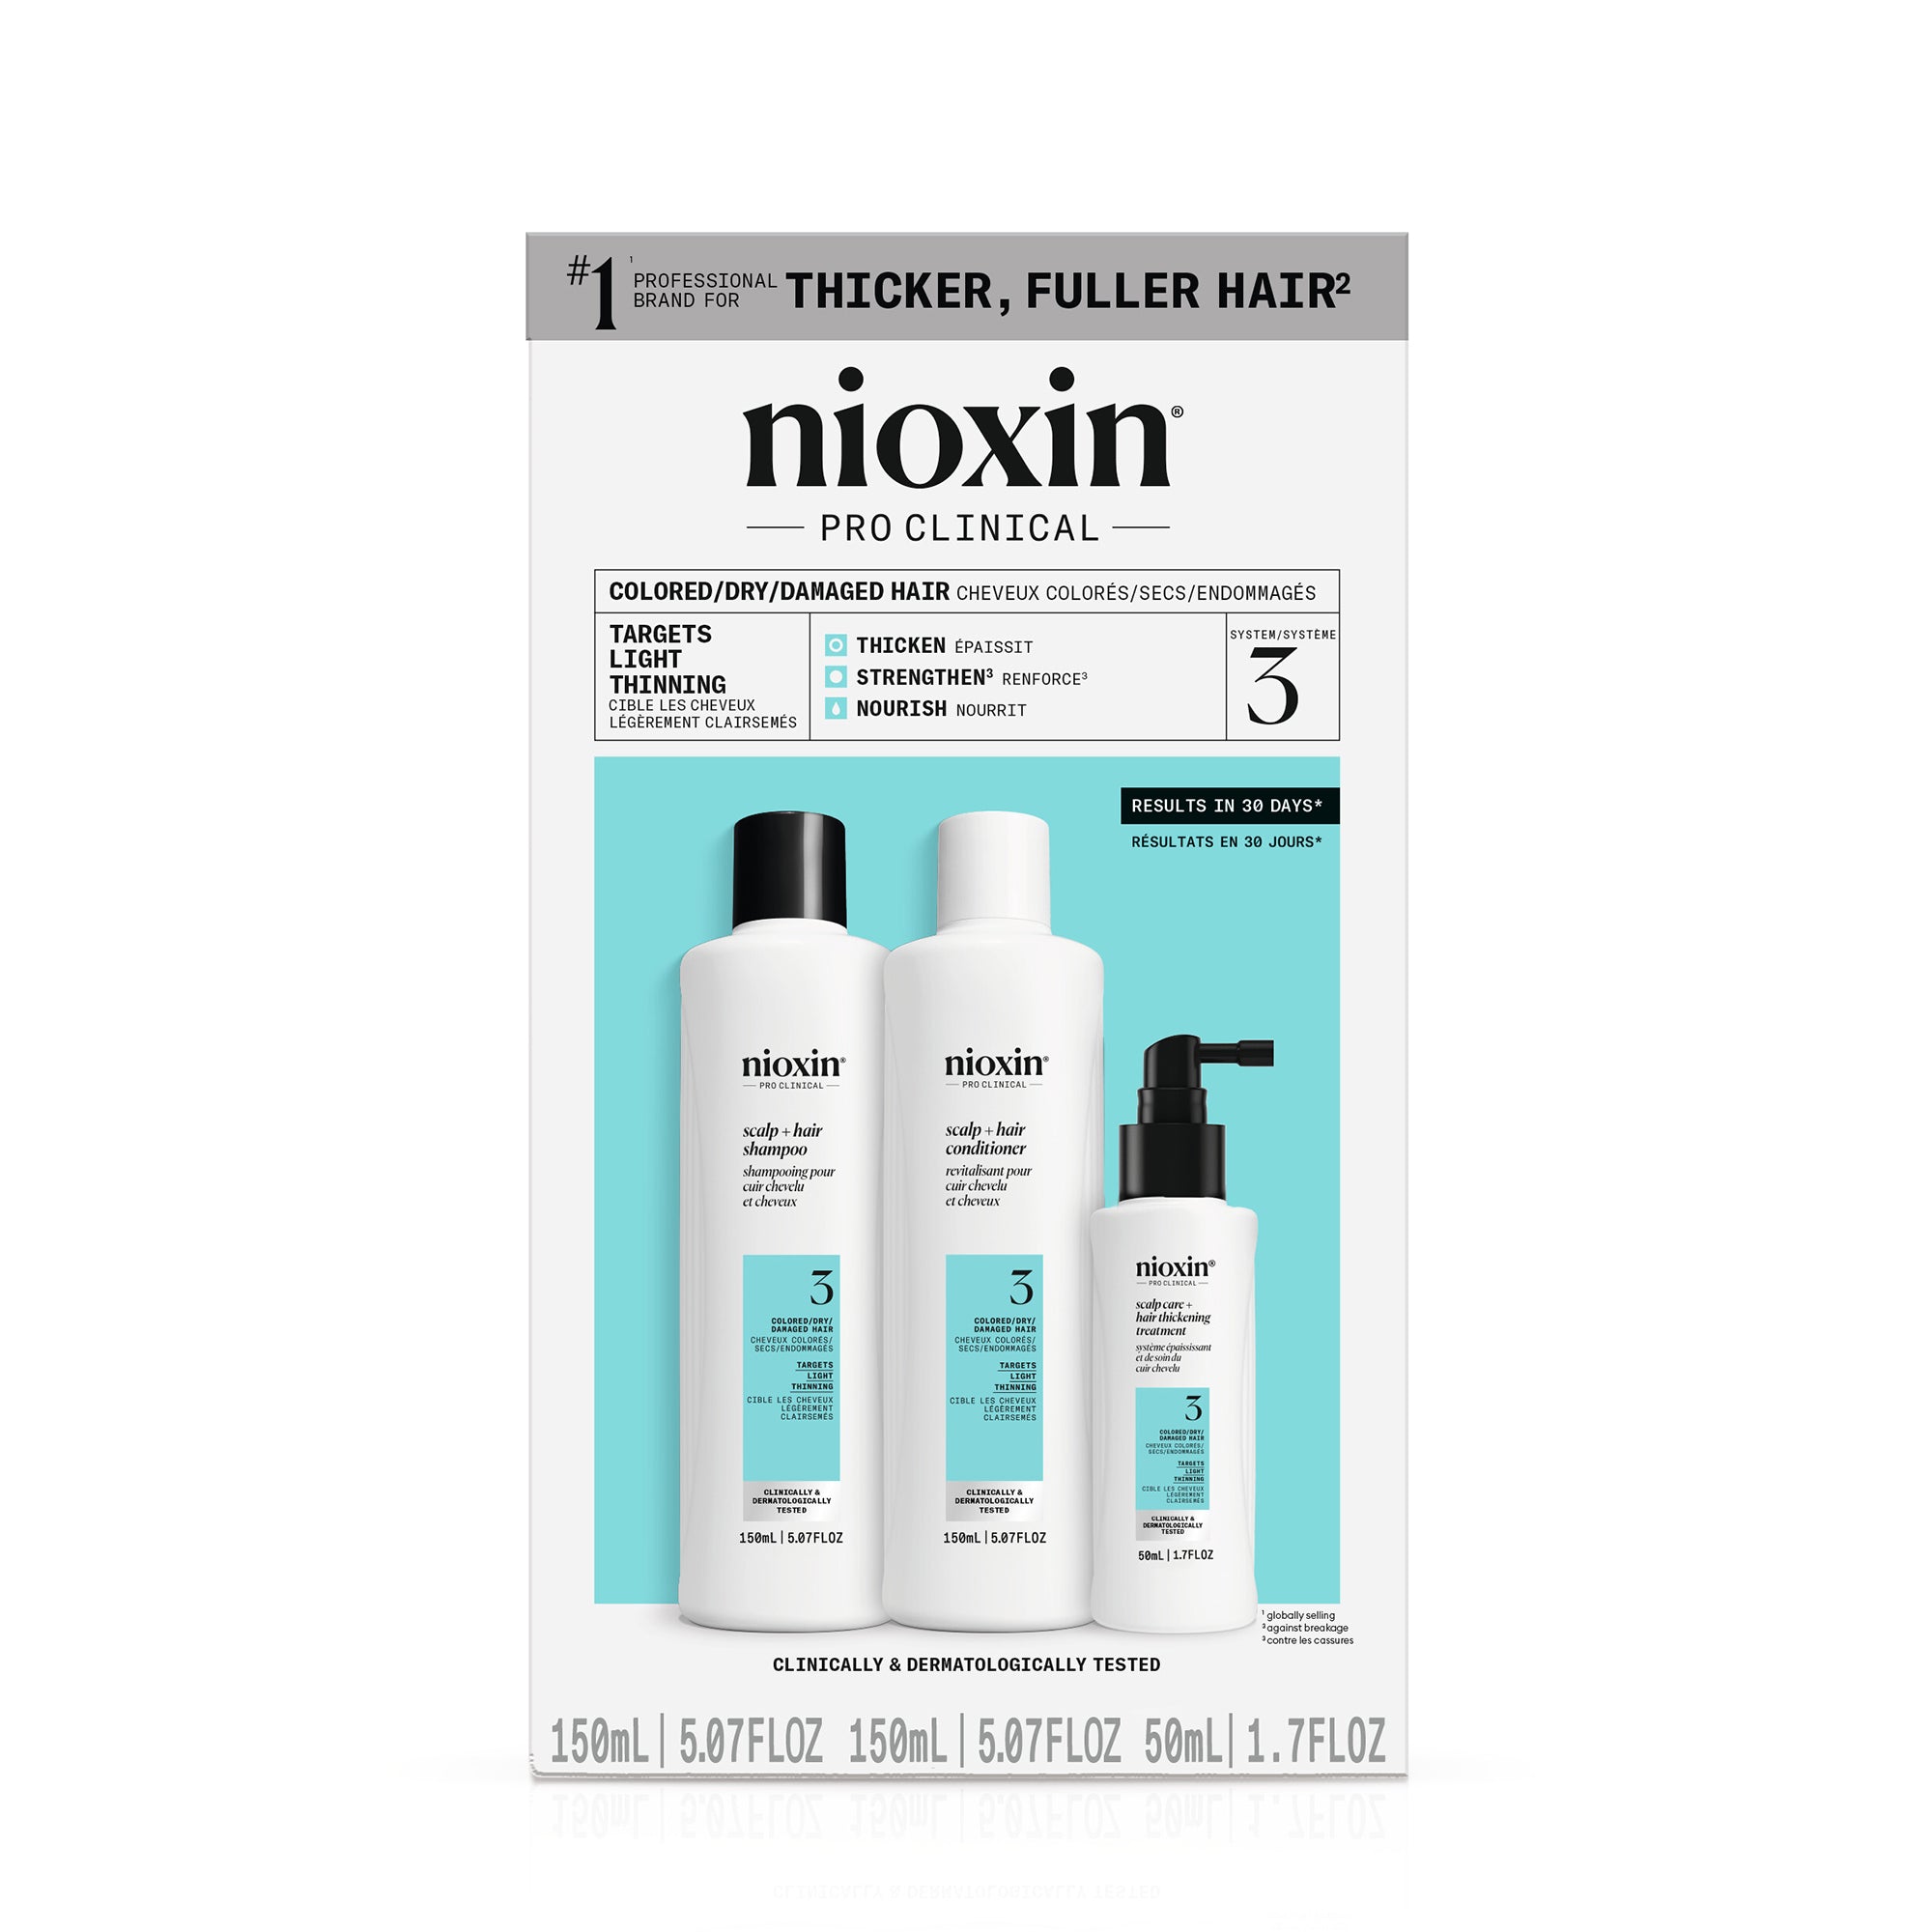 Nioxin System 3 Trial Kit / KIT